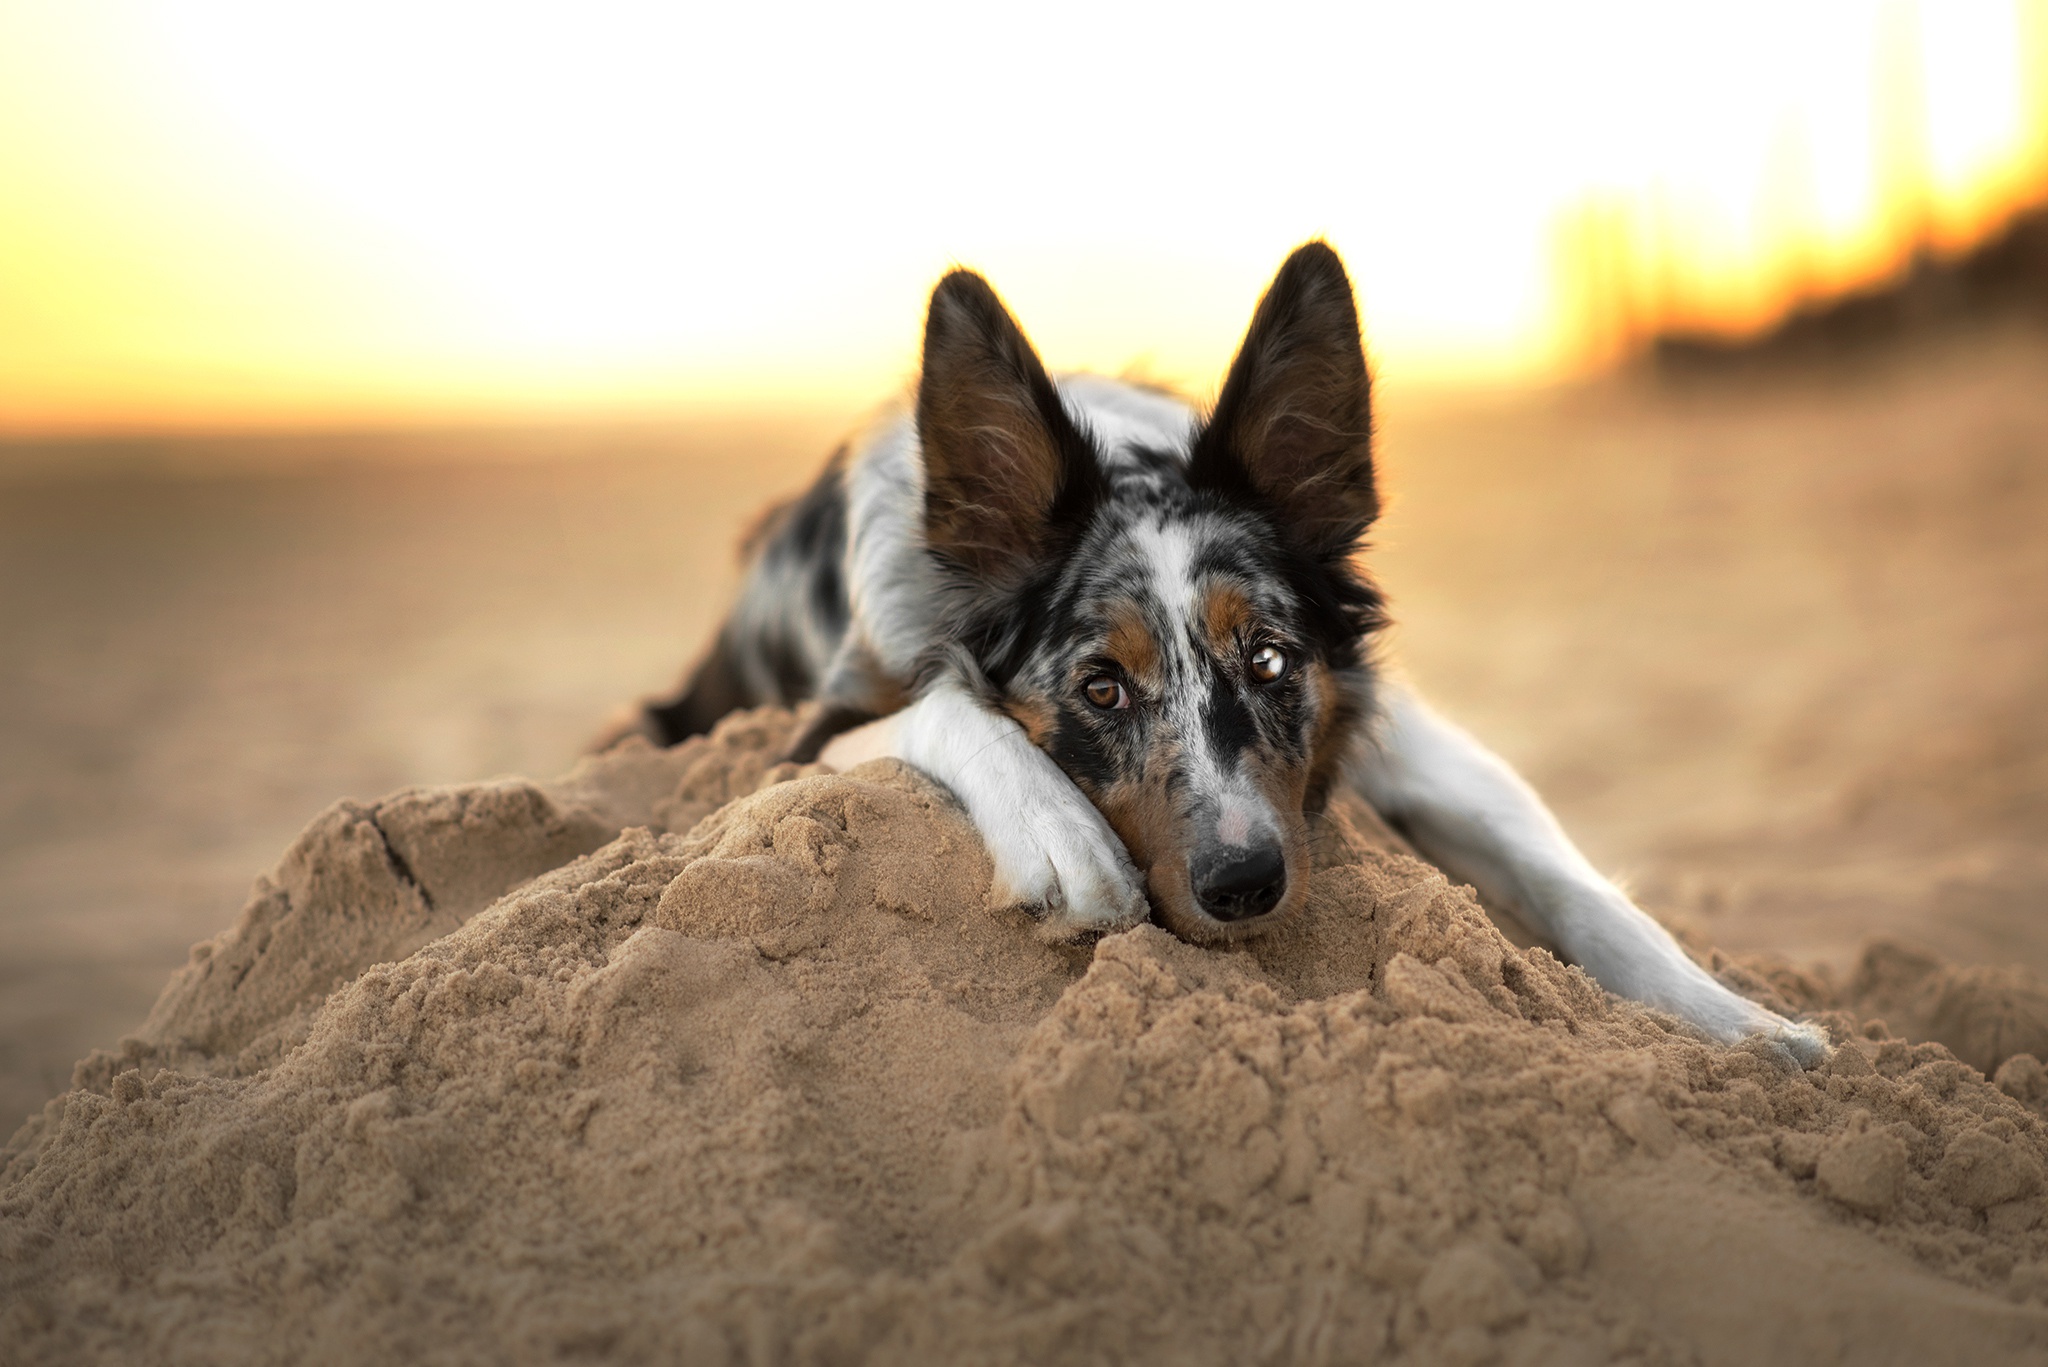 Пляж лапки. Бордер колли лежит. Бордер колли в песке. Песчаная собака. Собака лежит на песке.